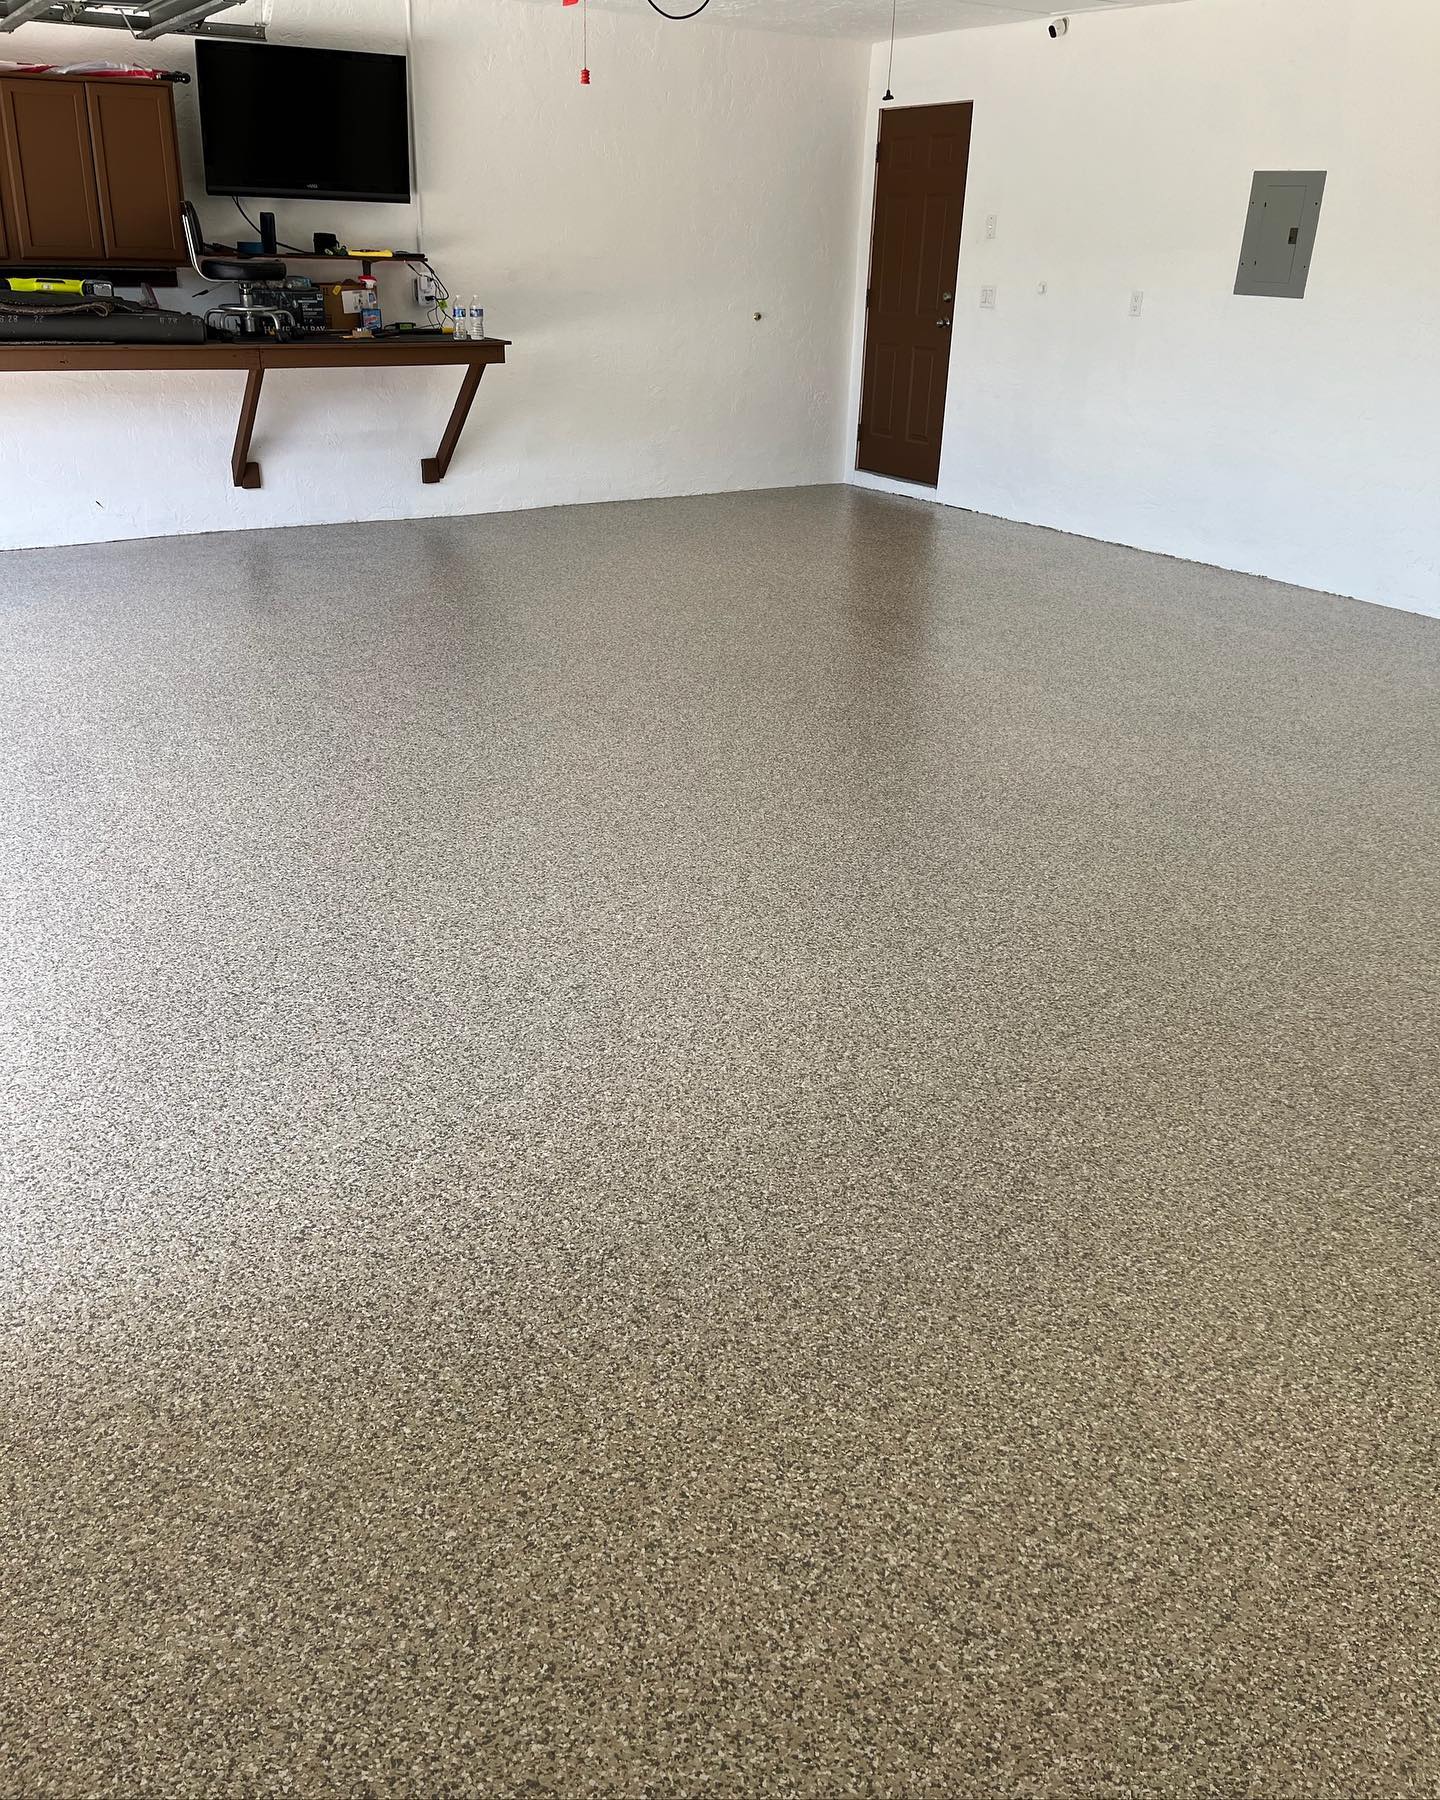 residential epoxy flooring